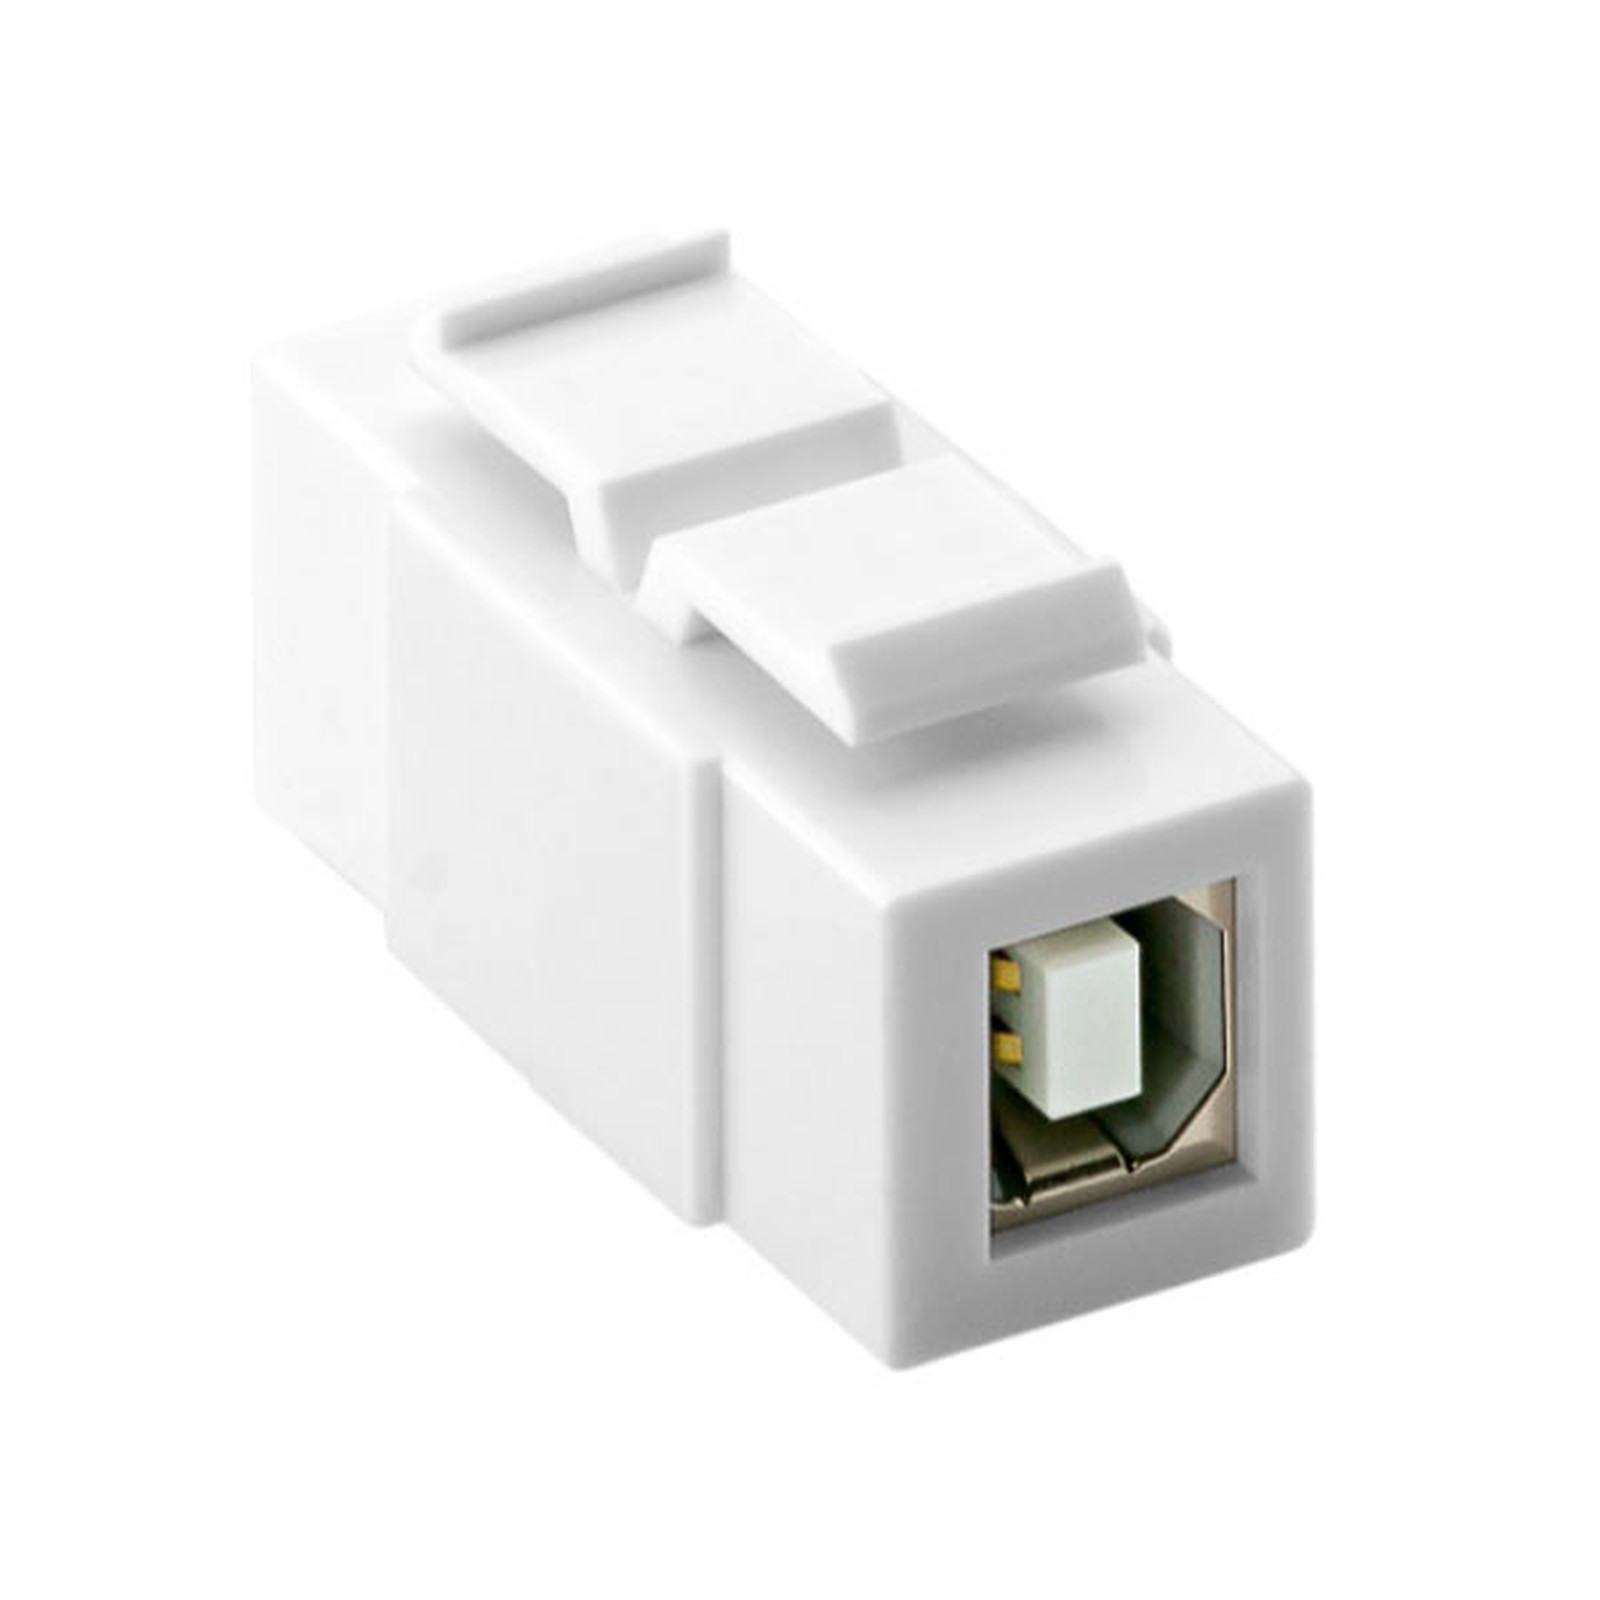 Goobay adaptateur USB 2.0 type B / type B pour boitier reseau type Keystone - USB Goobay